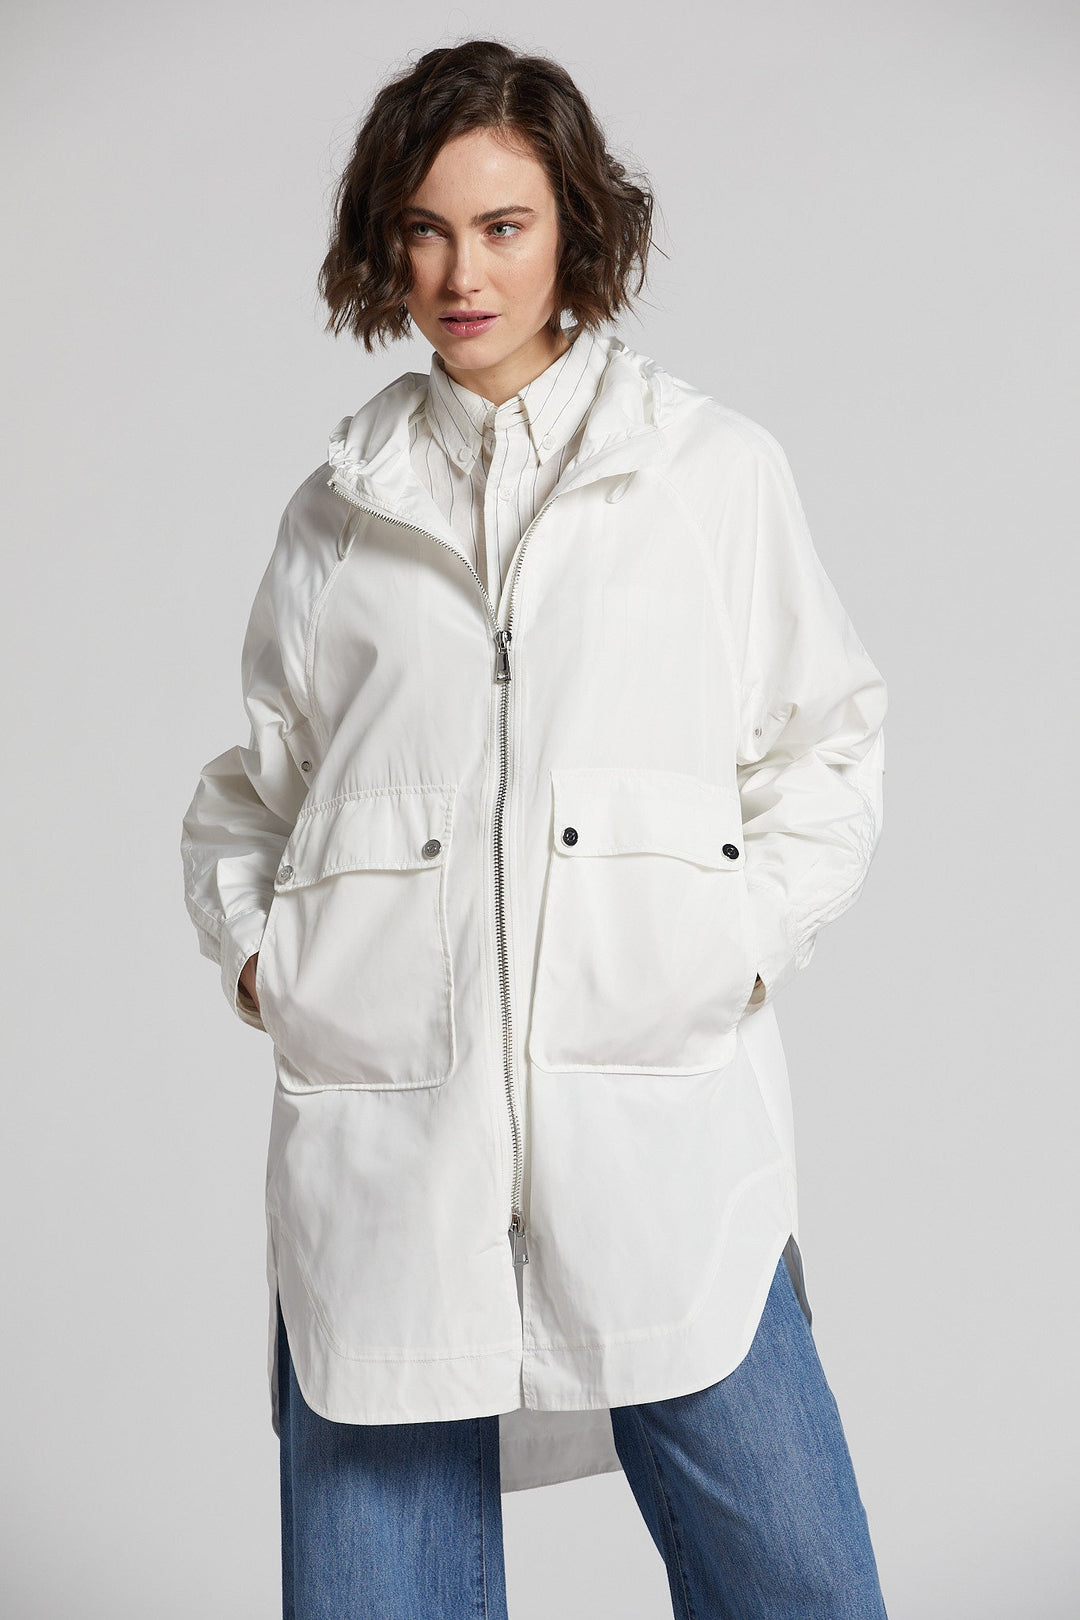 Adroit Atelier's Nikita Lightweight Hooded Raincoat in White